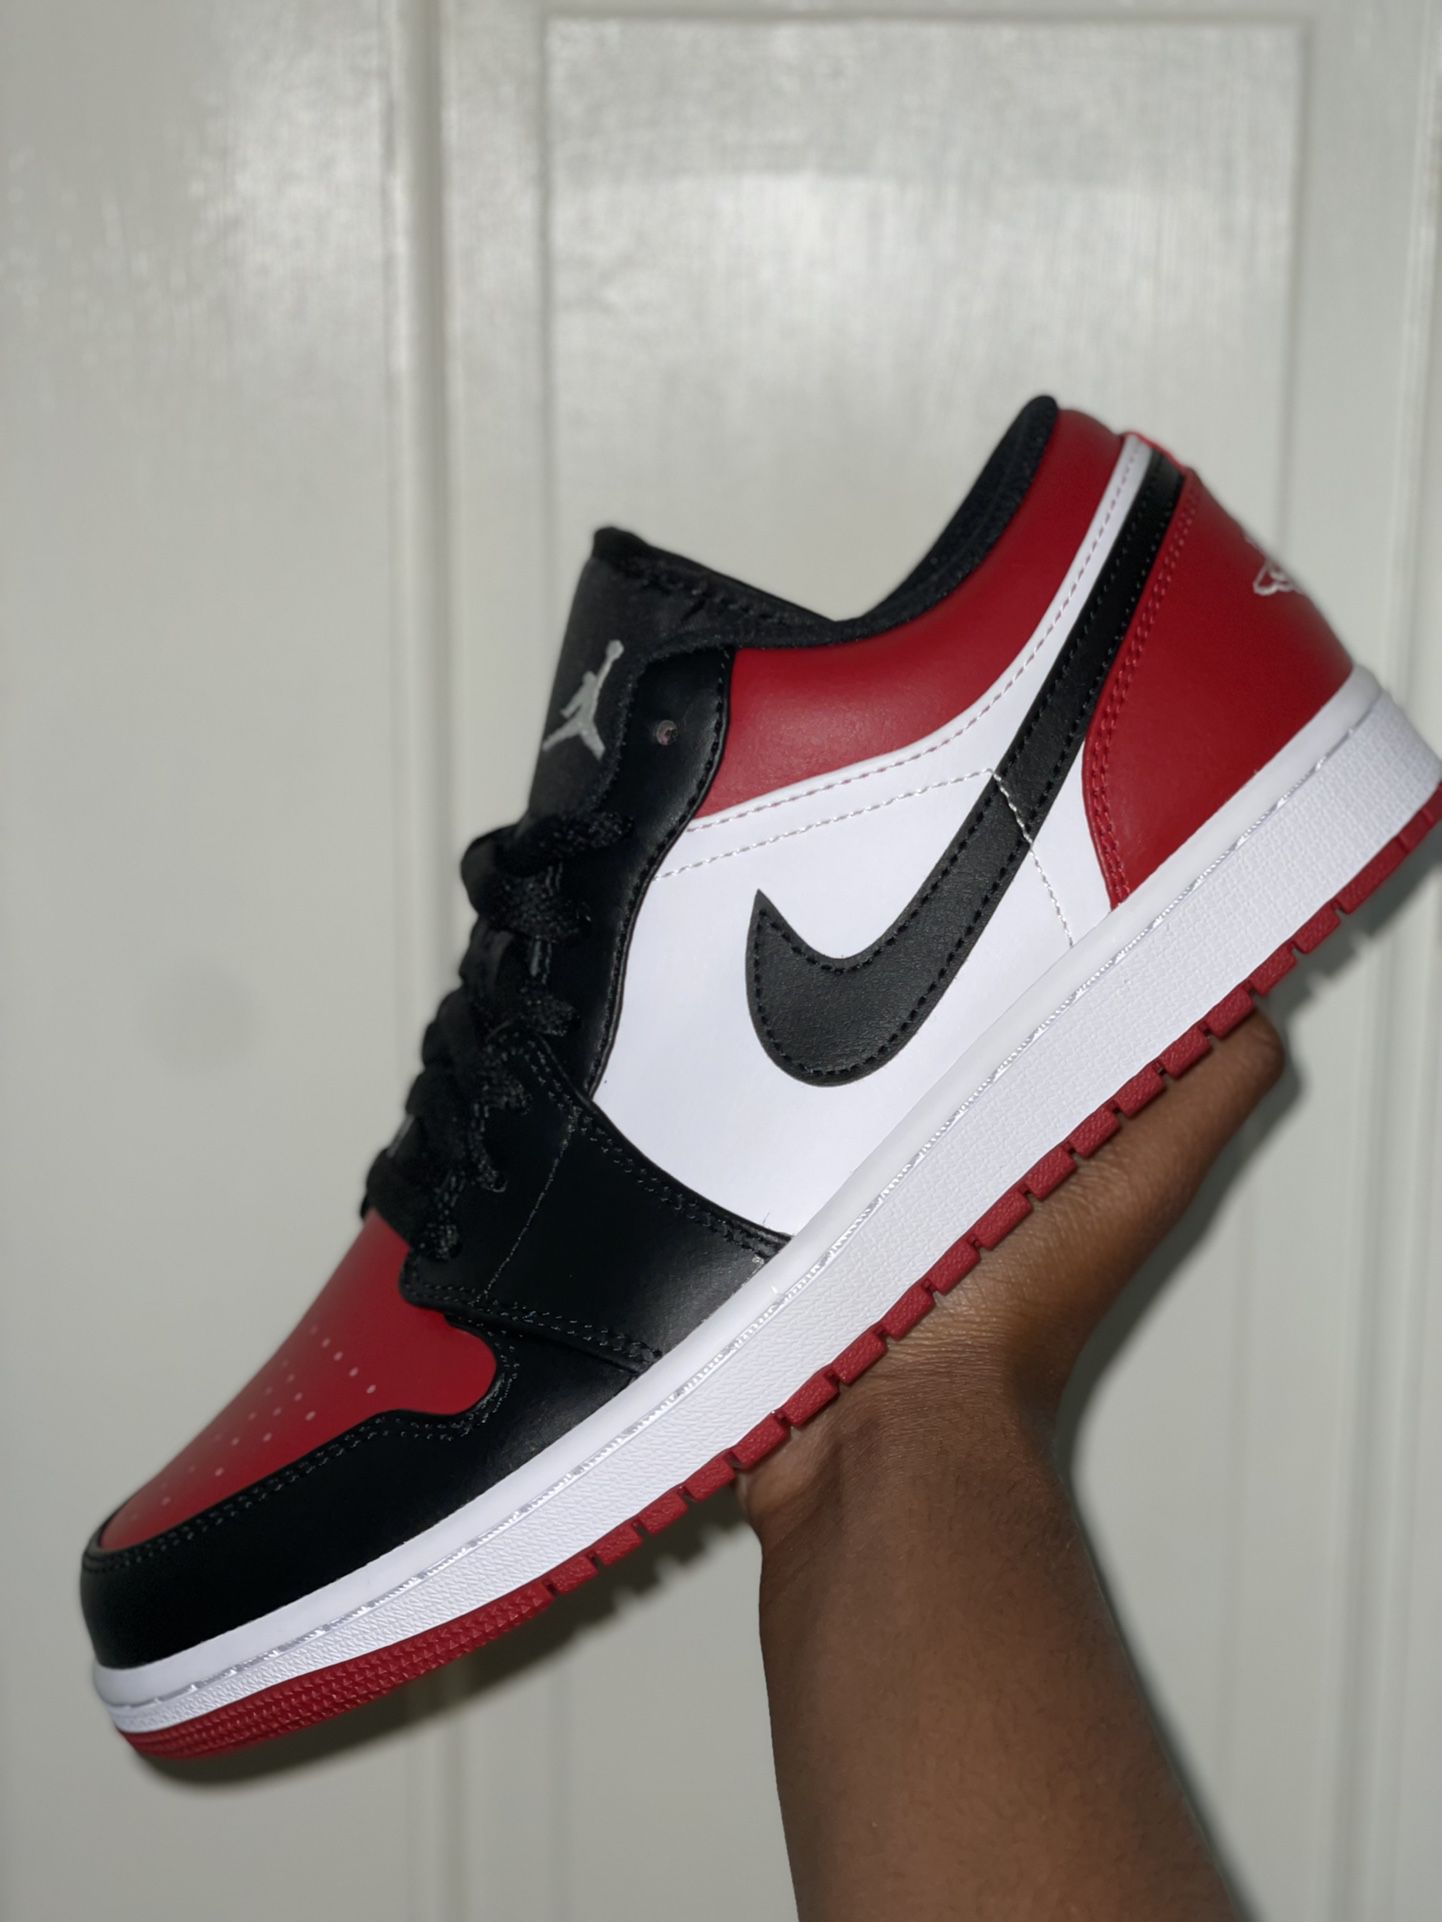 Jordan 1 Low “Bred Toe” Size 8.5